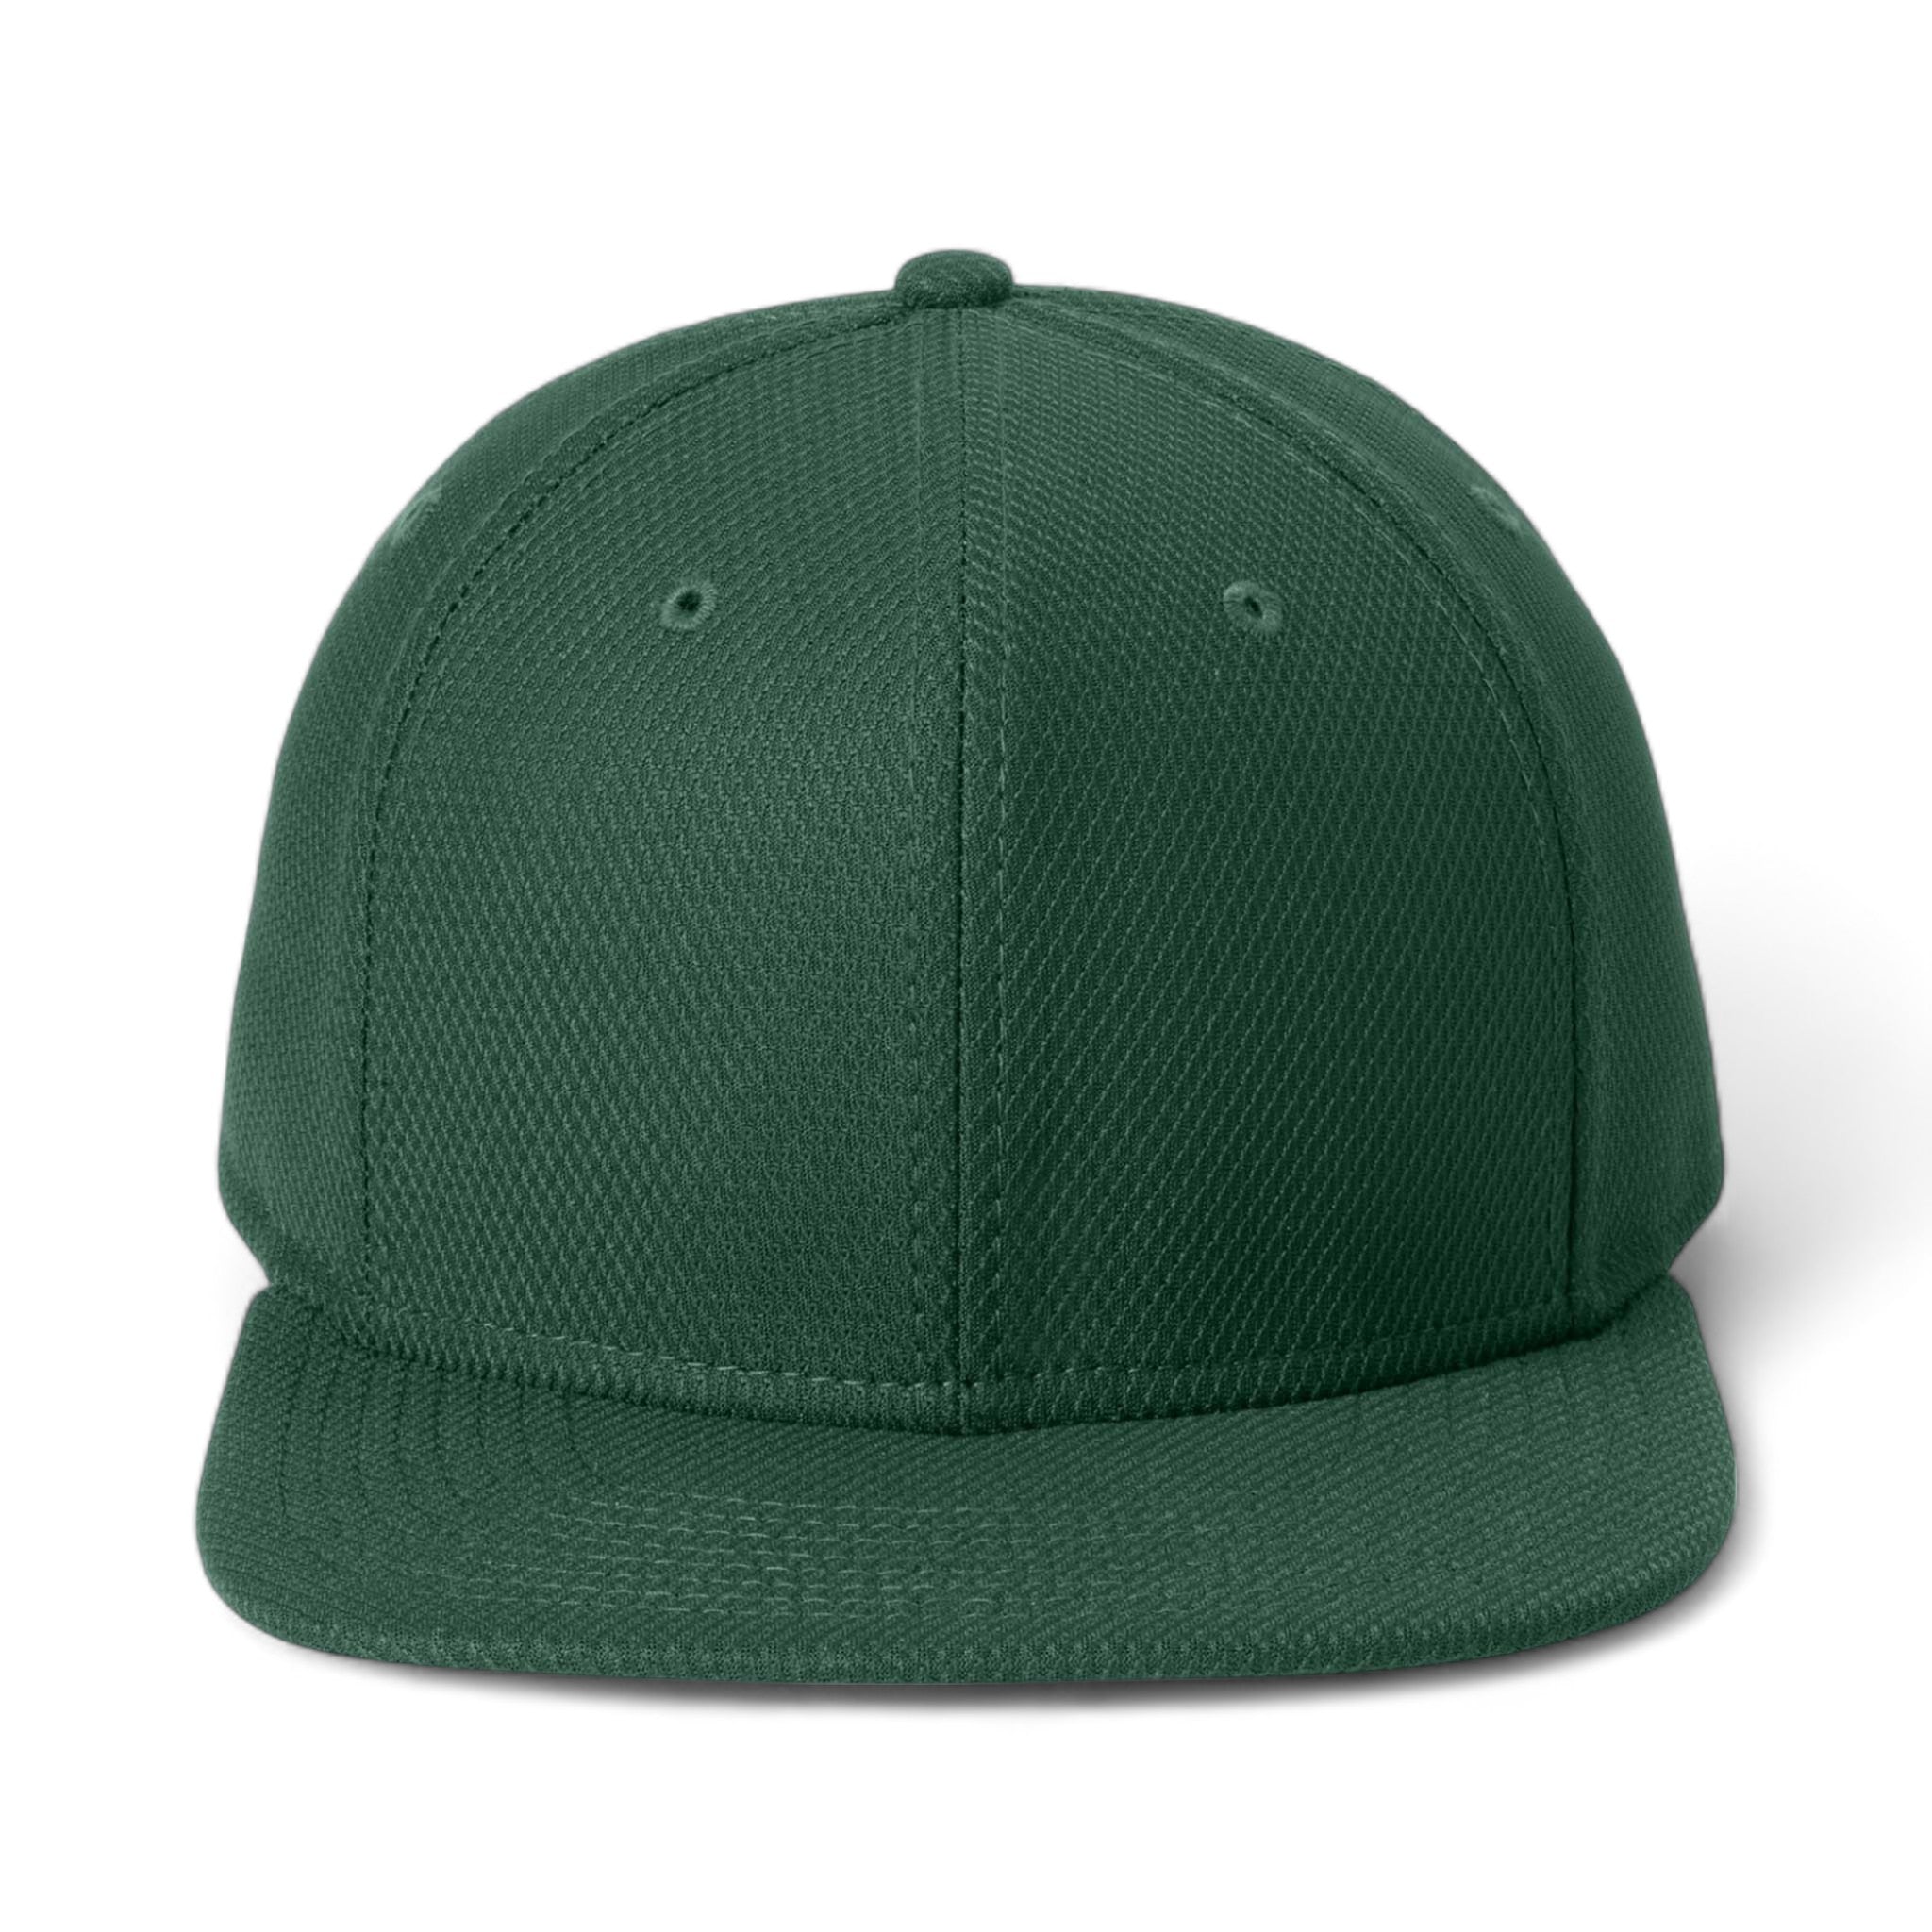 Front view of New Era NE404 custom hat in dark green